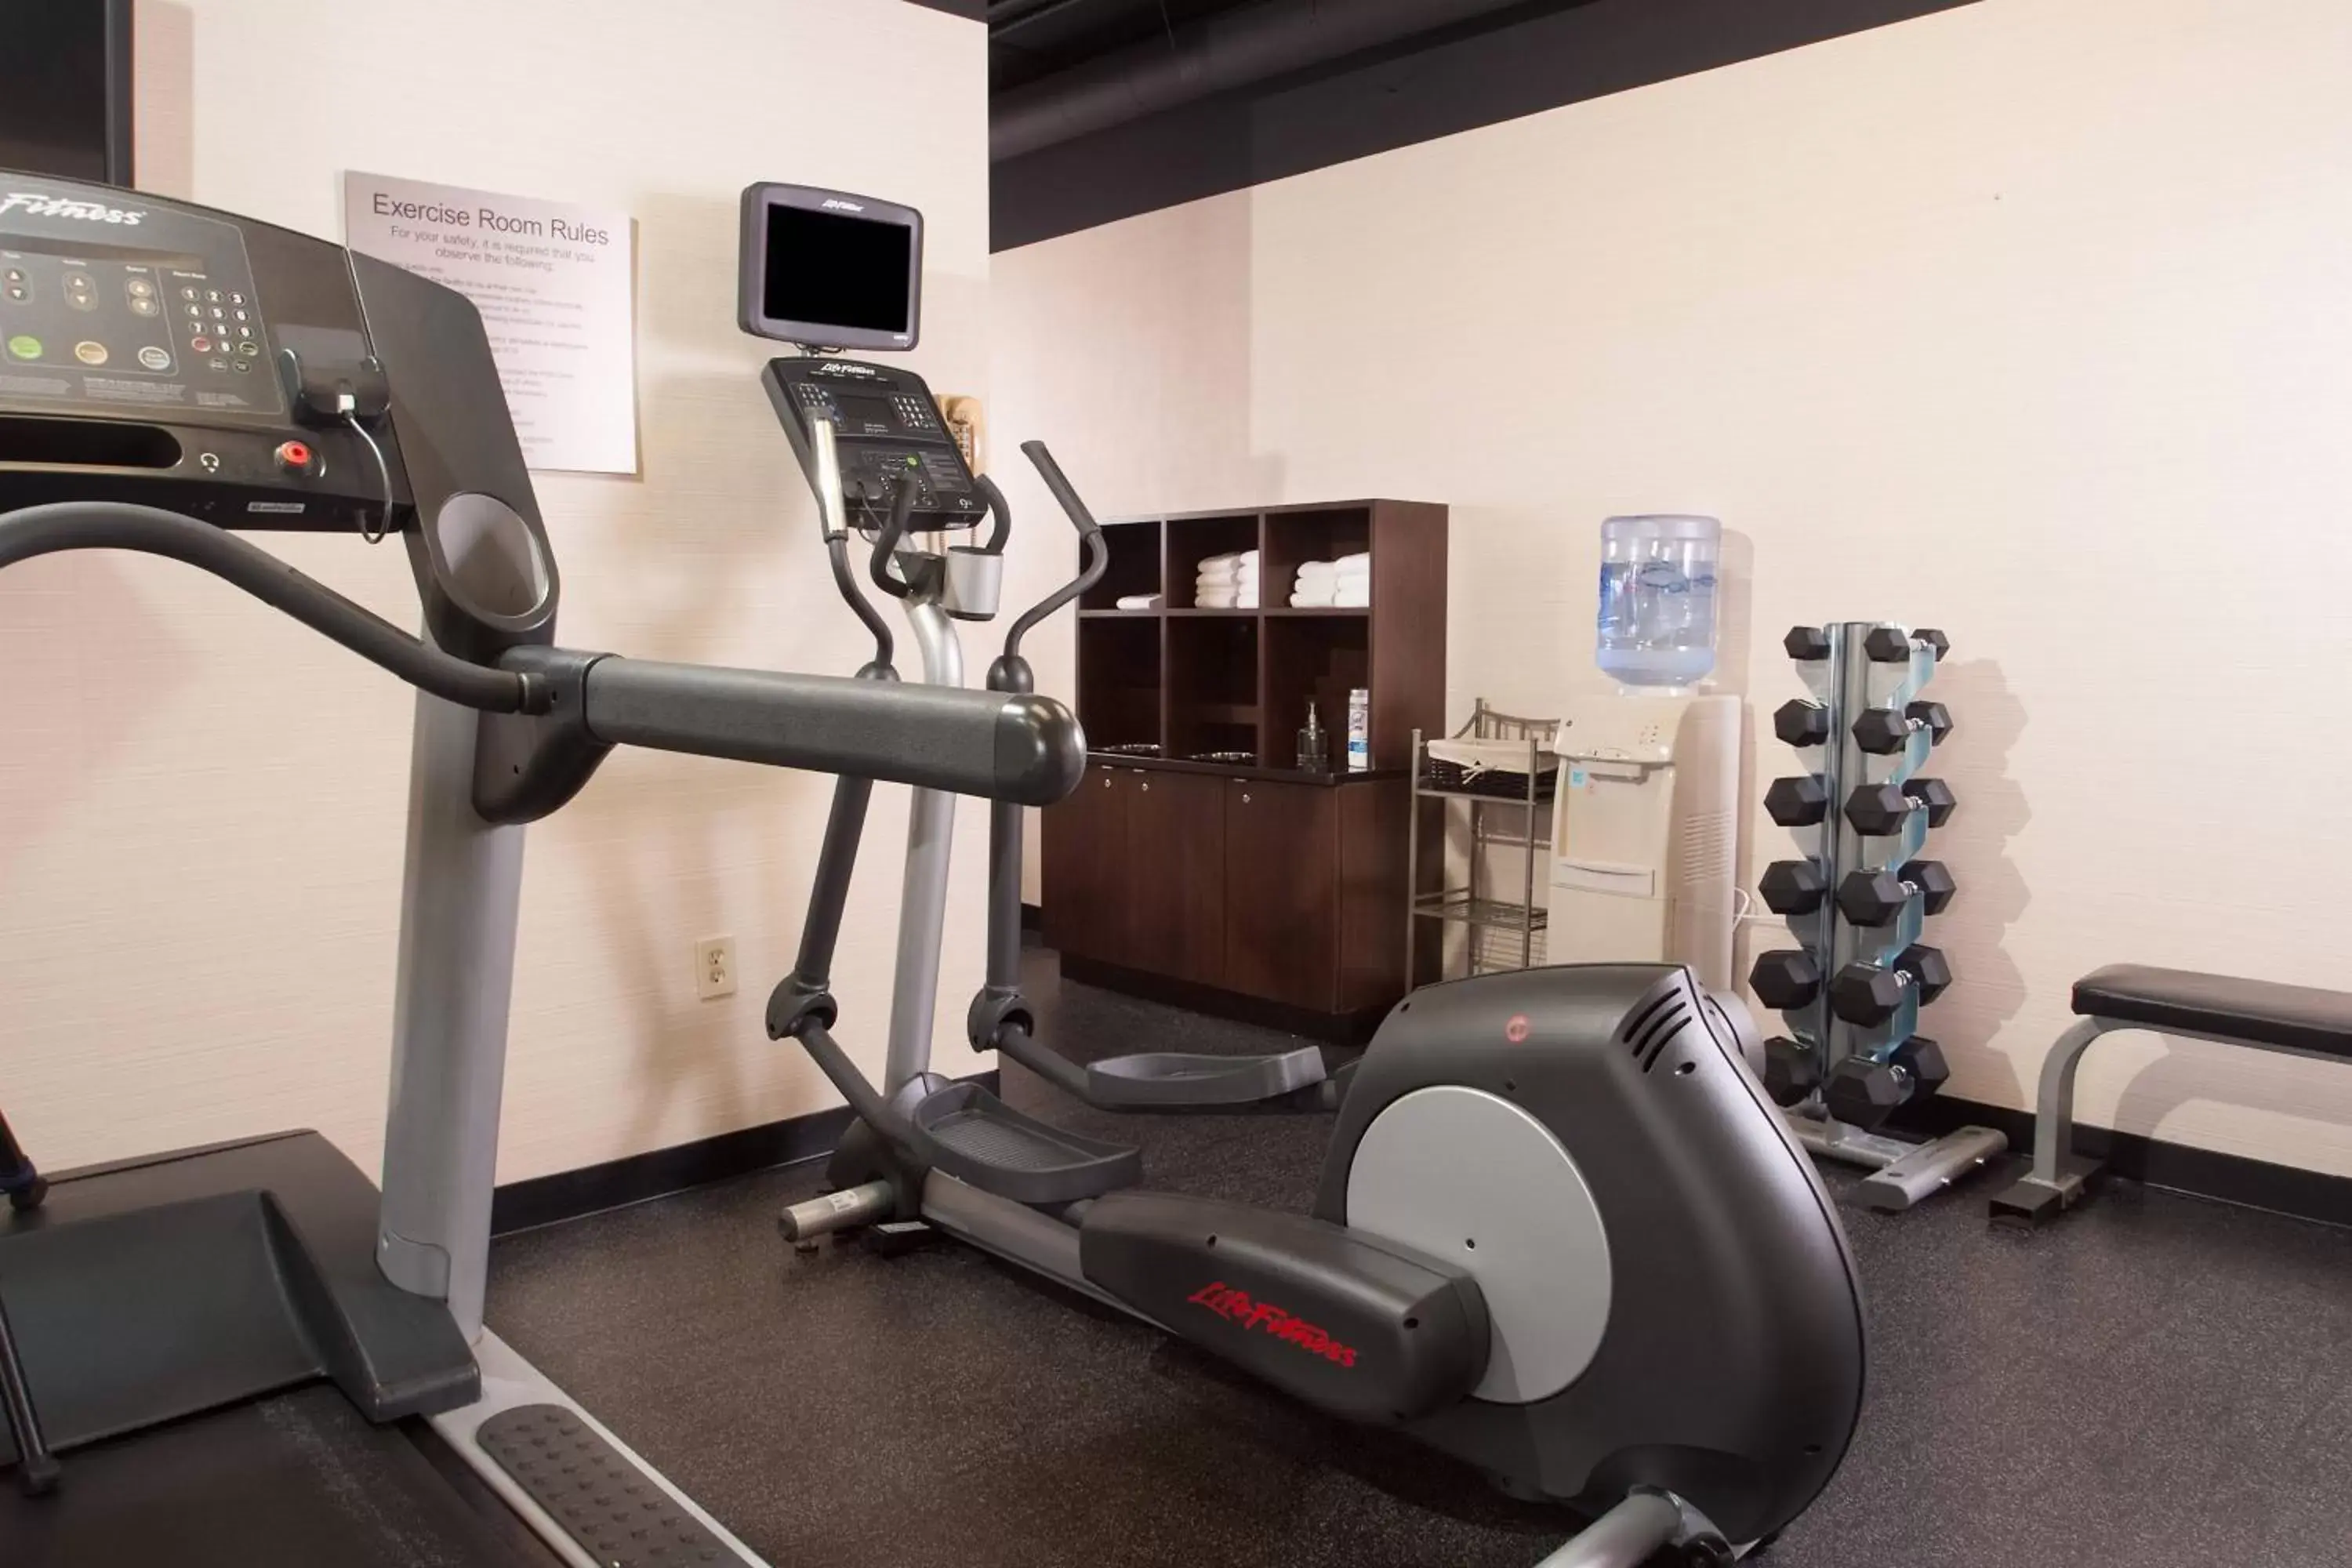 Fitness centre/facilities, Fitness Center/Facilities in Fairfield Inn Greenville Spartanburg Airport